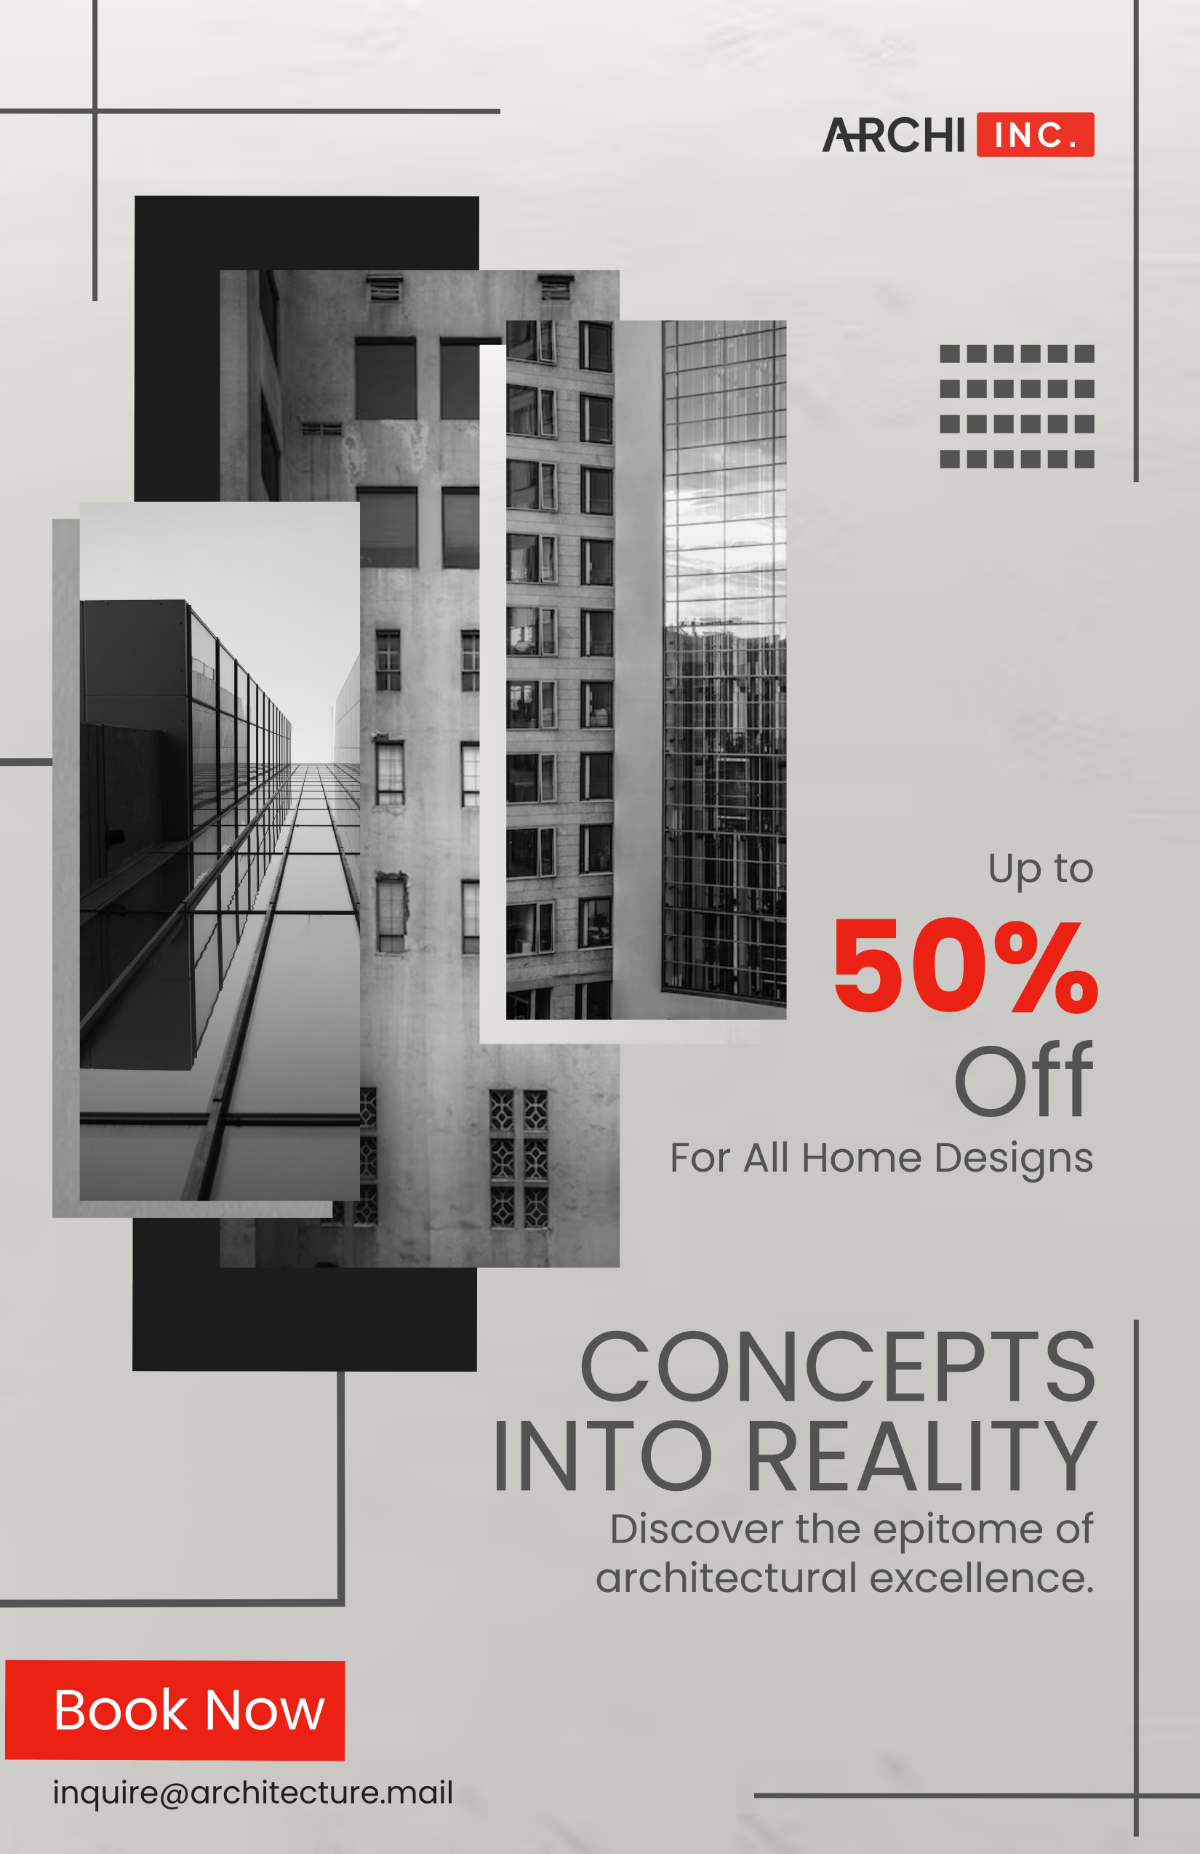 Architecture Marketing Poster